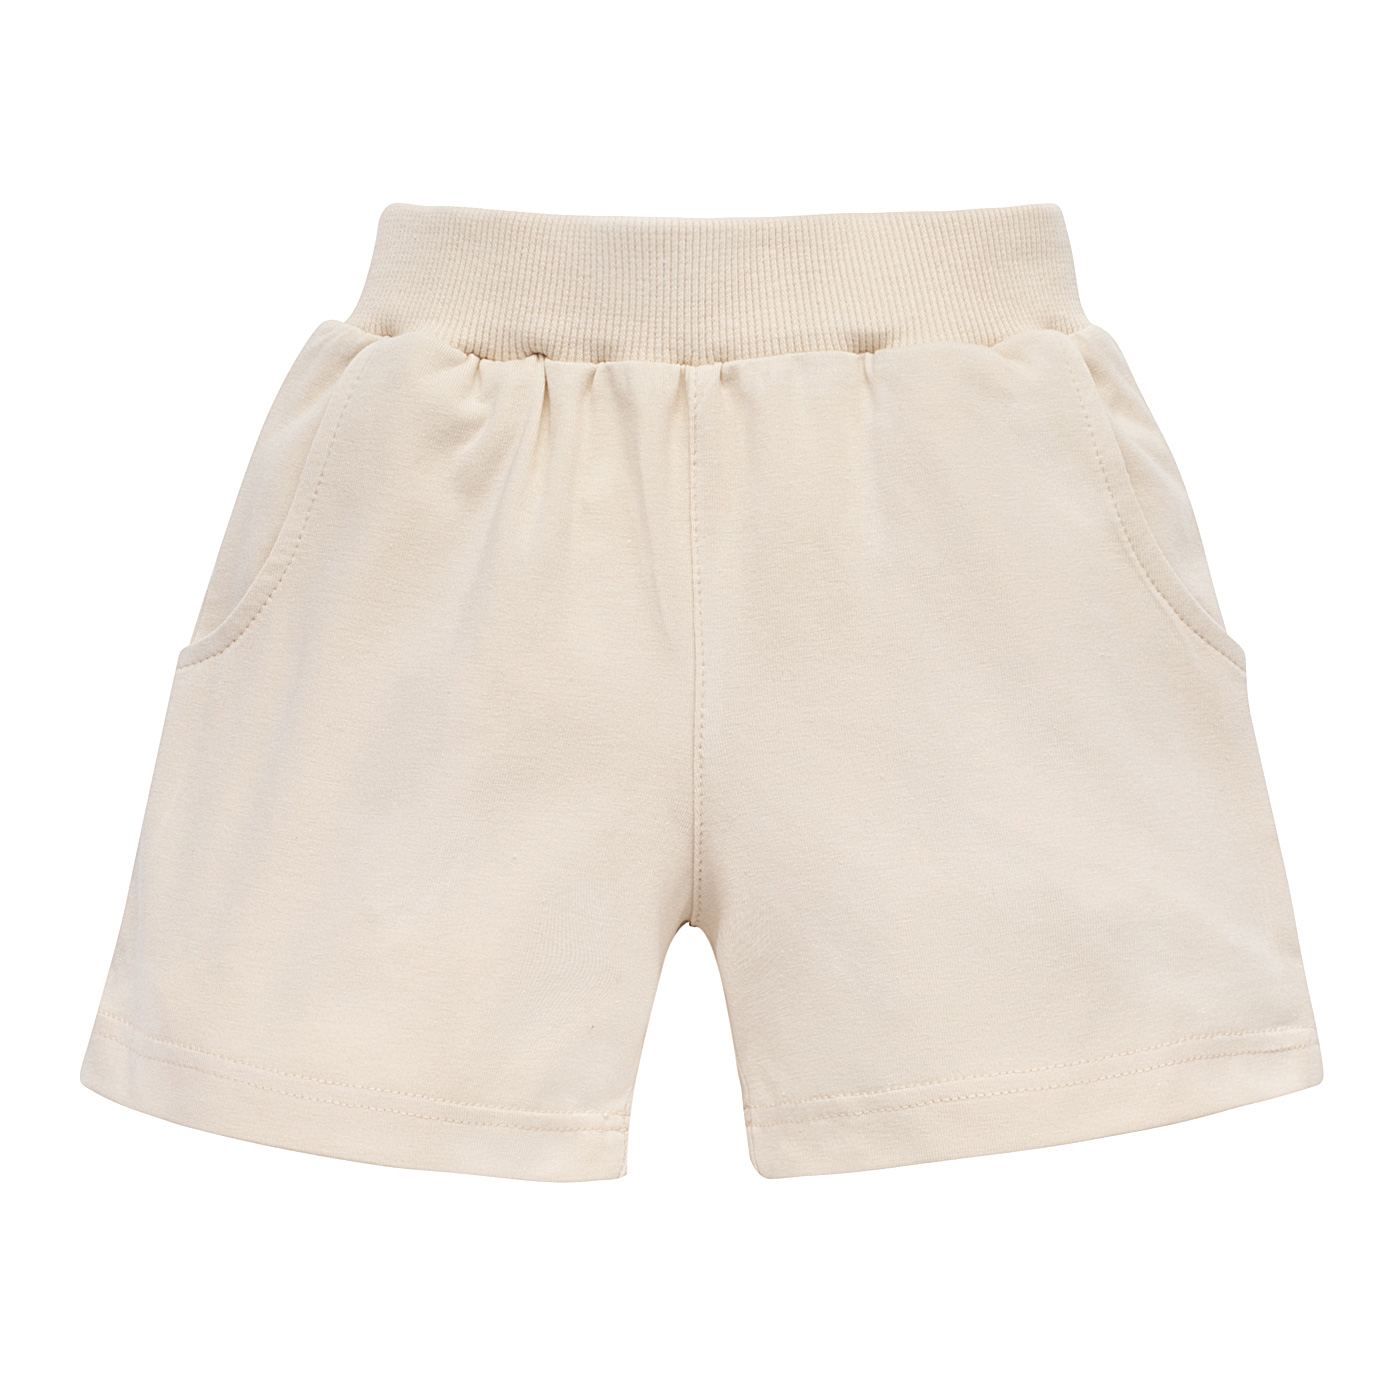 Pinokio Kids's Shorts Safari 1-02-2406-26